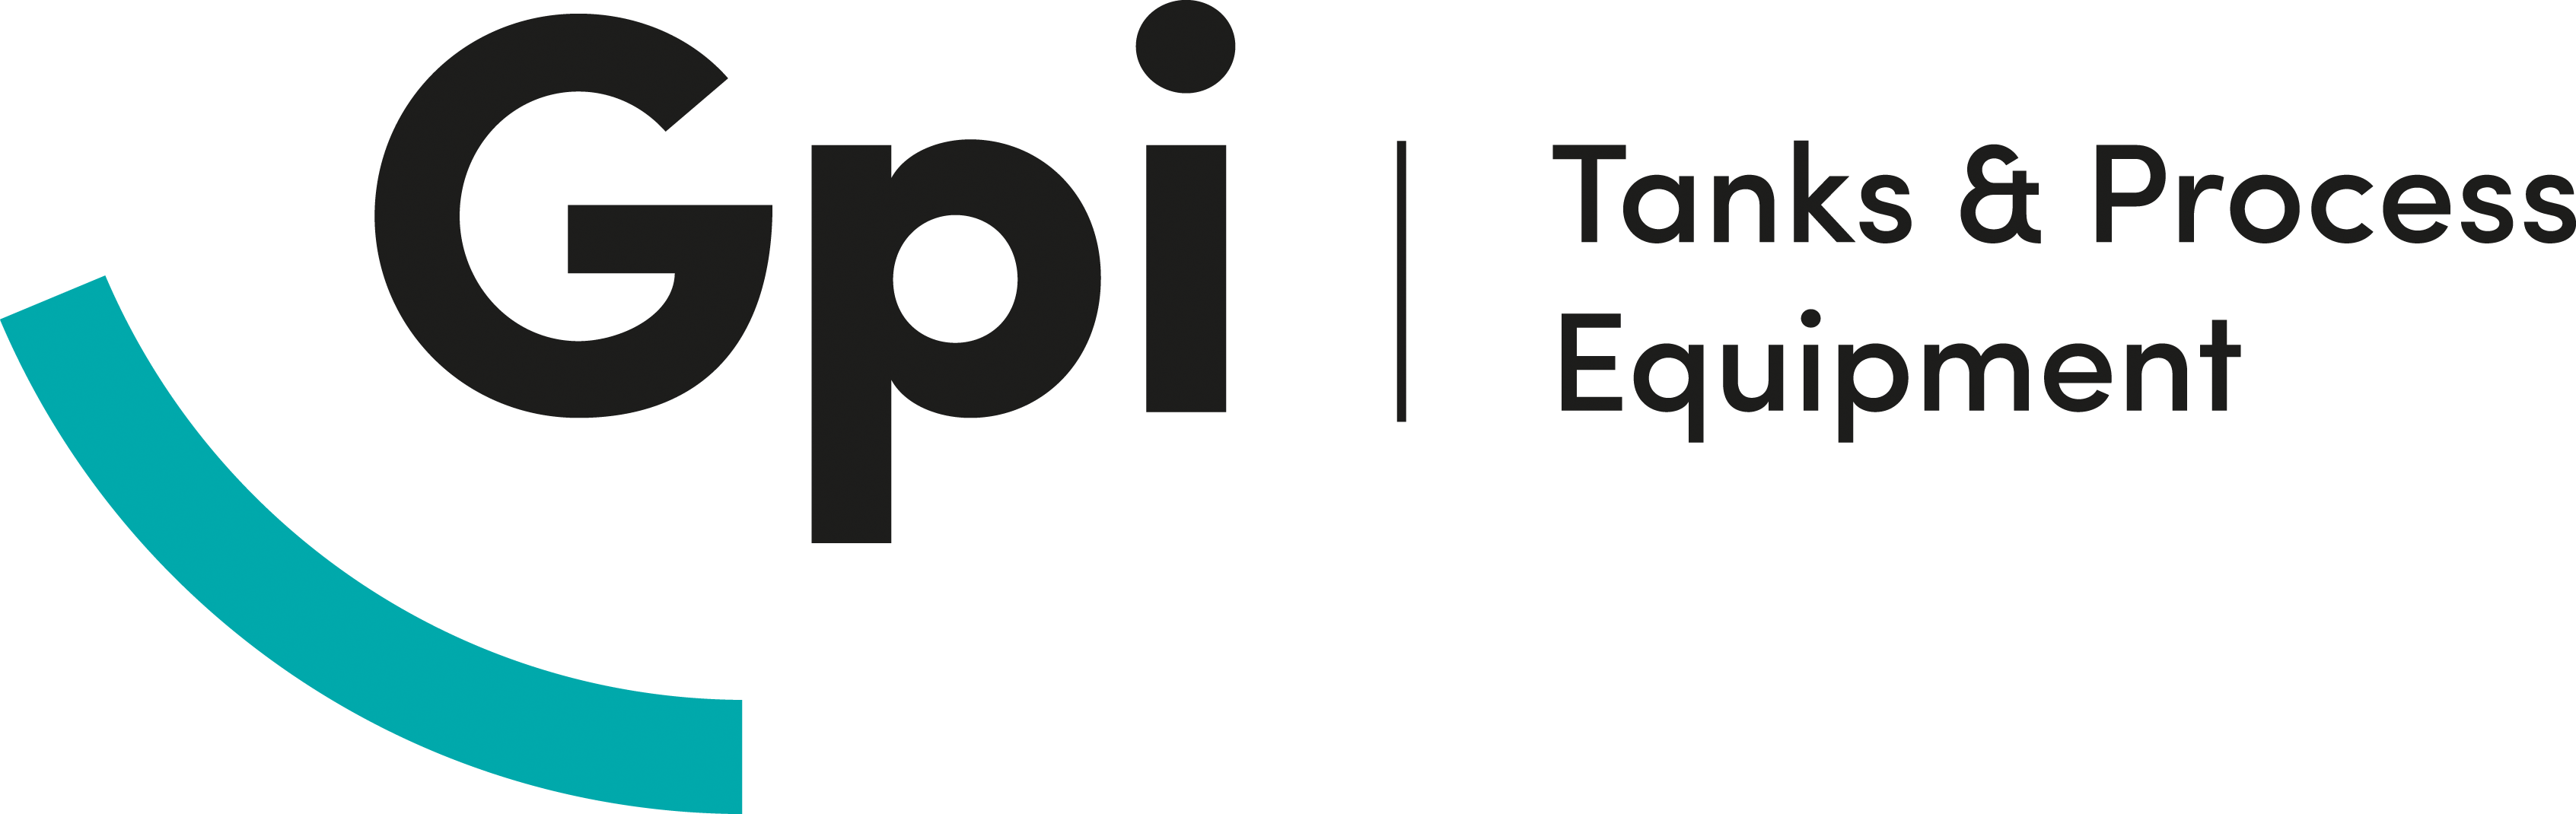 Gpi tpe logo CMYK tagline